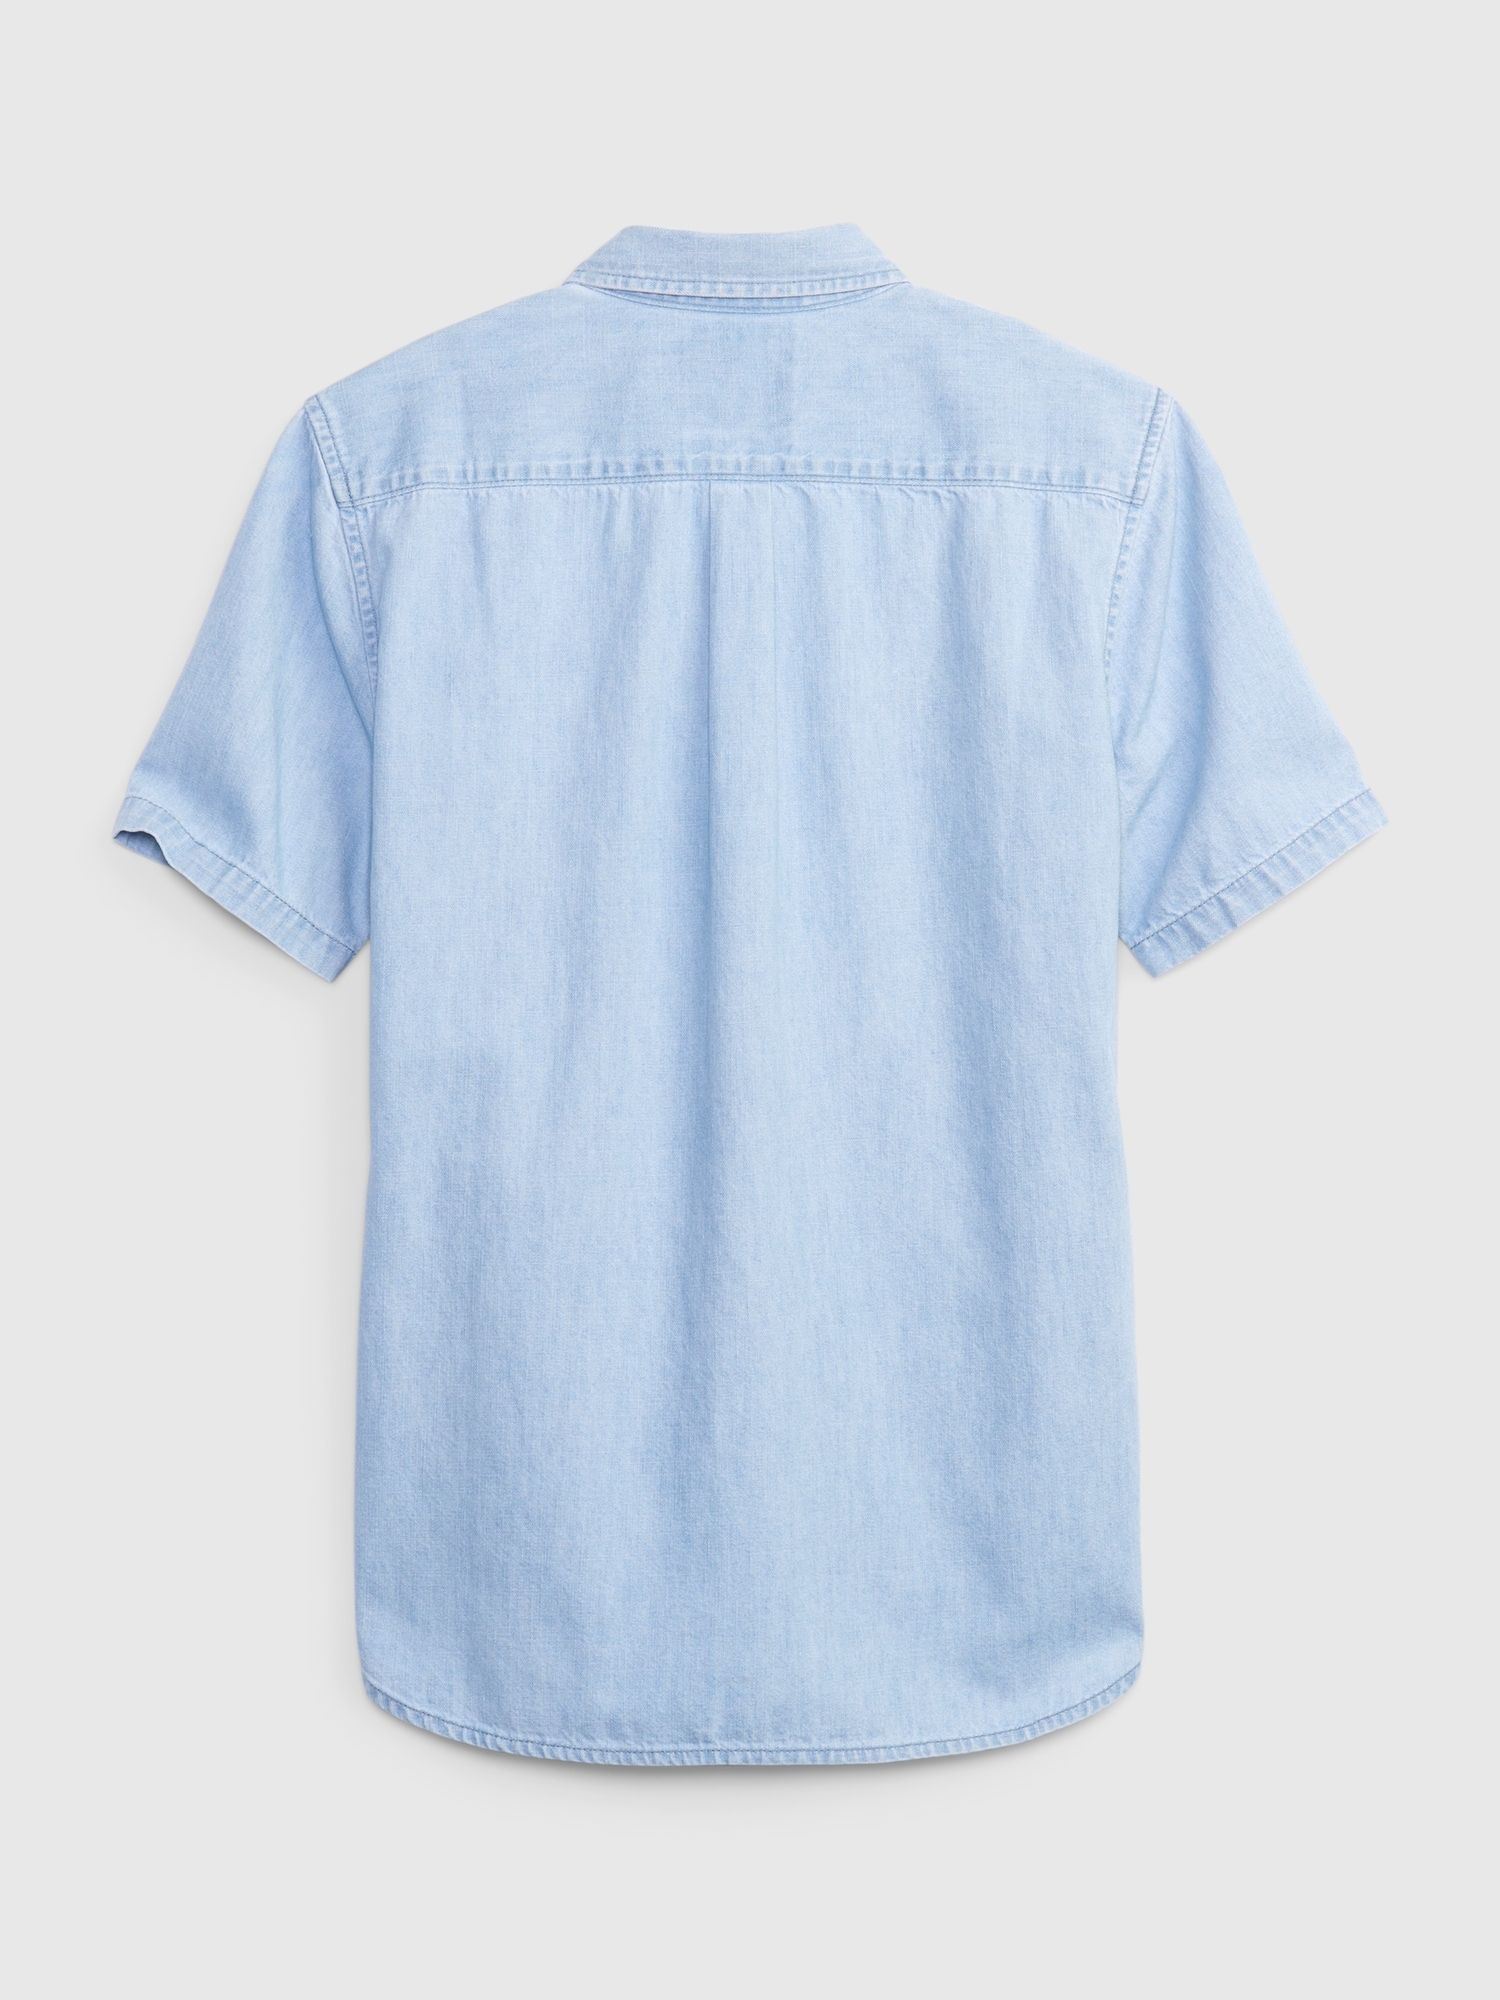 Teen Denim Button-Down Shirt with Washwell | Gap